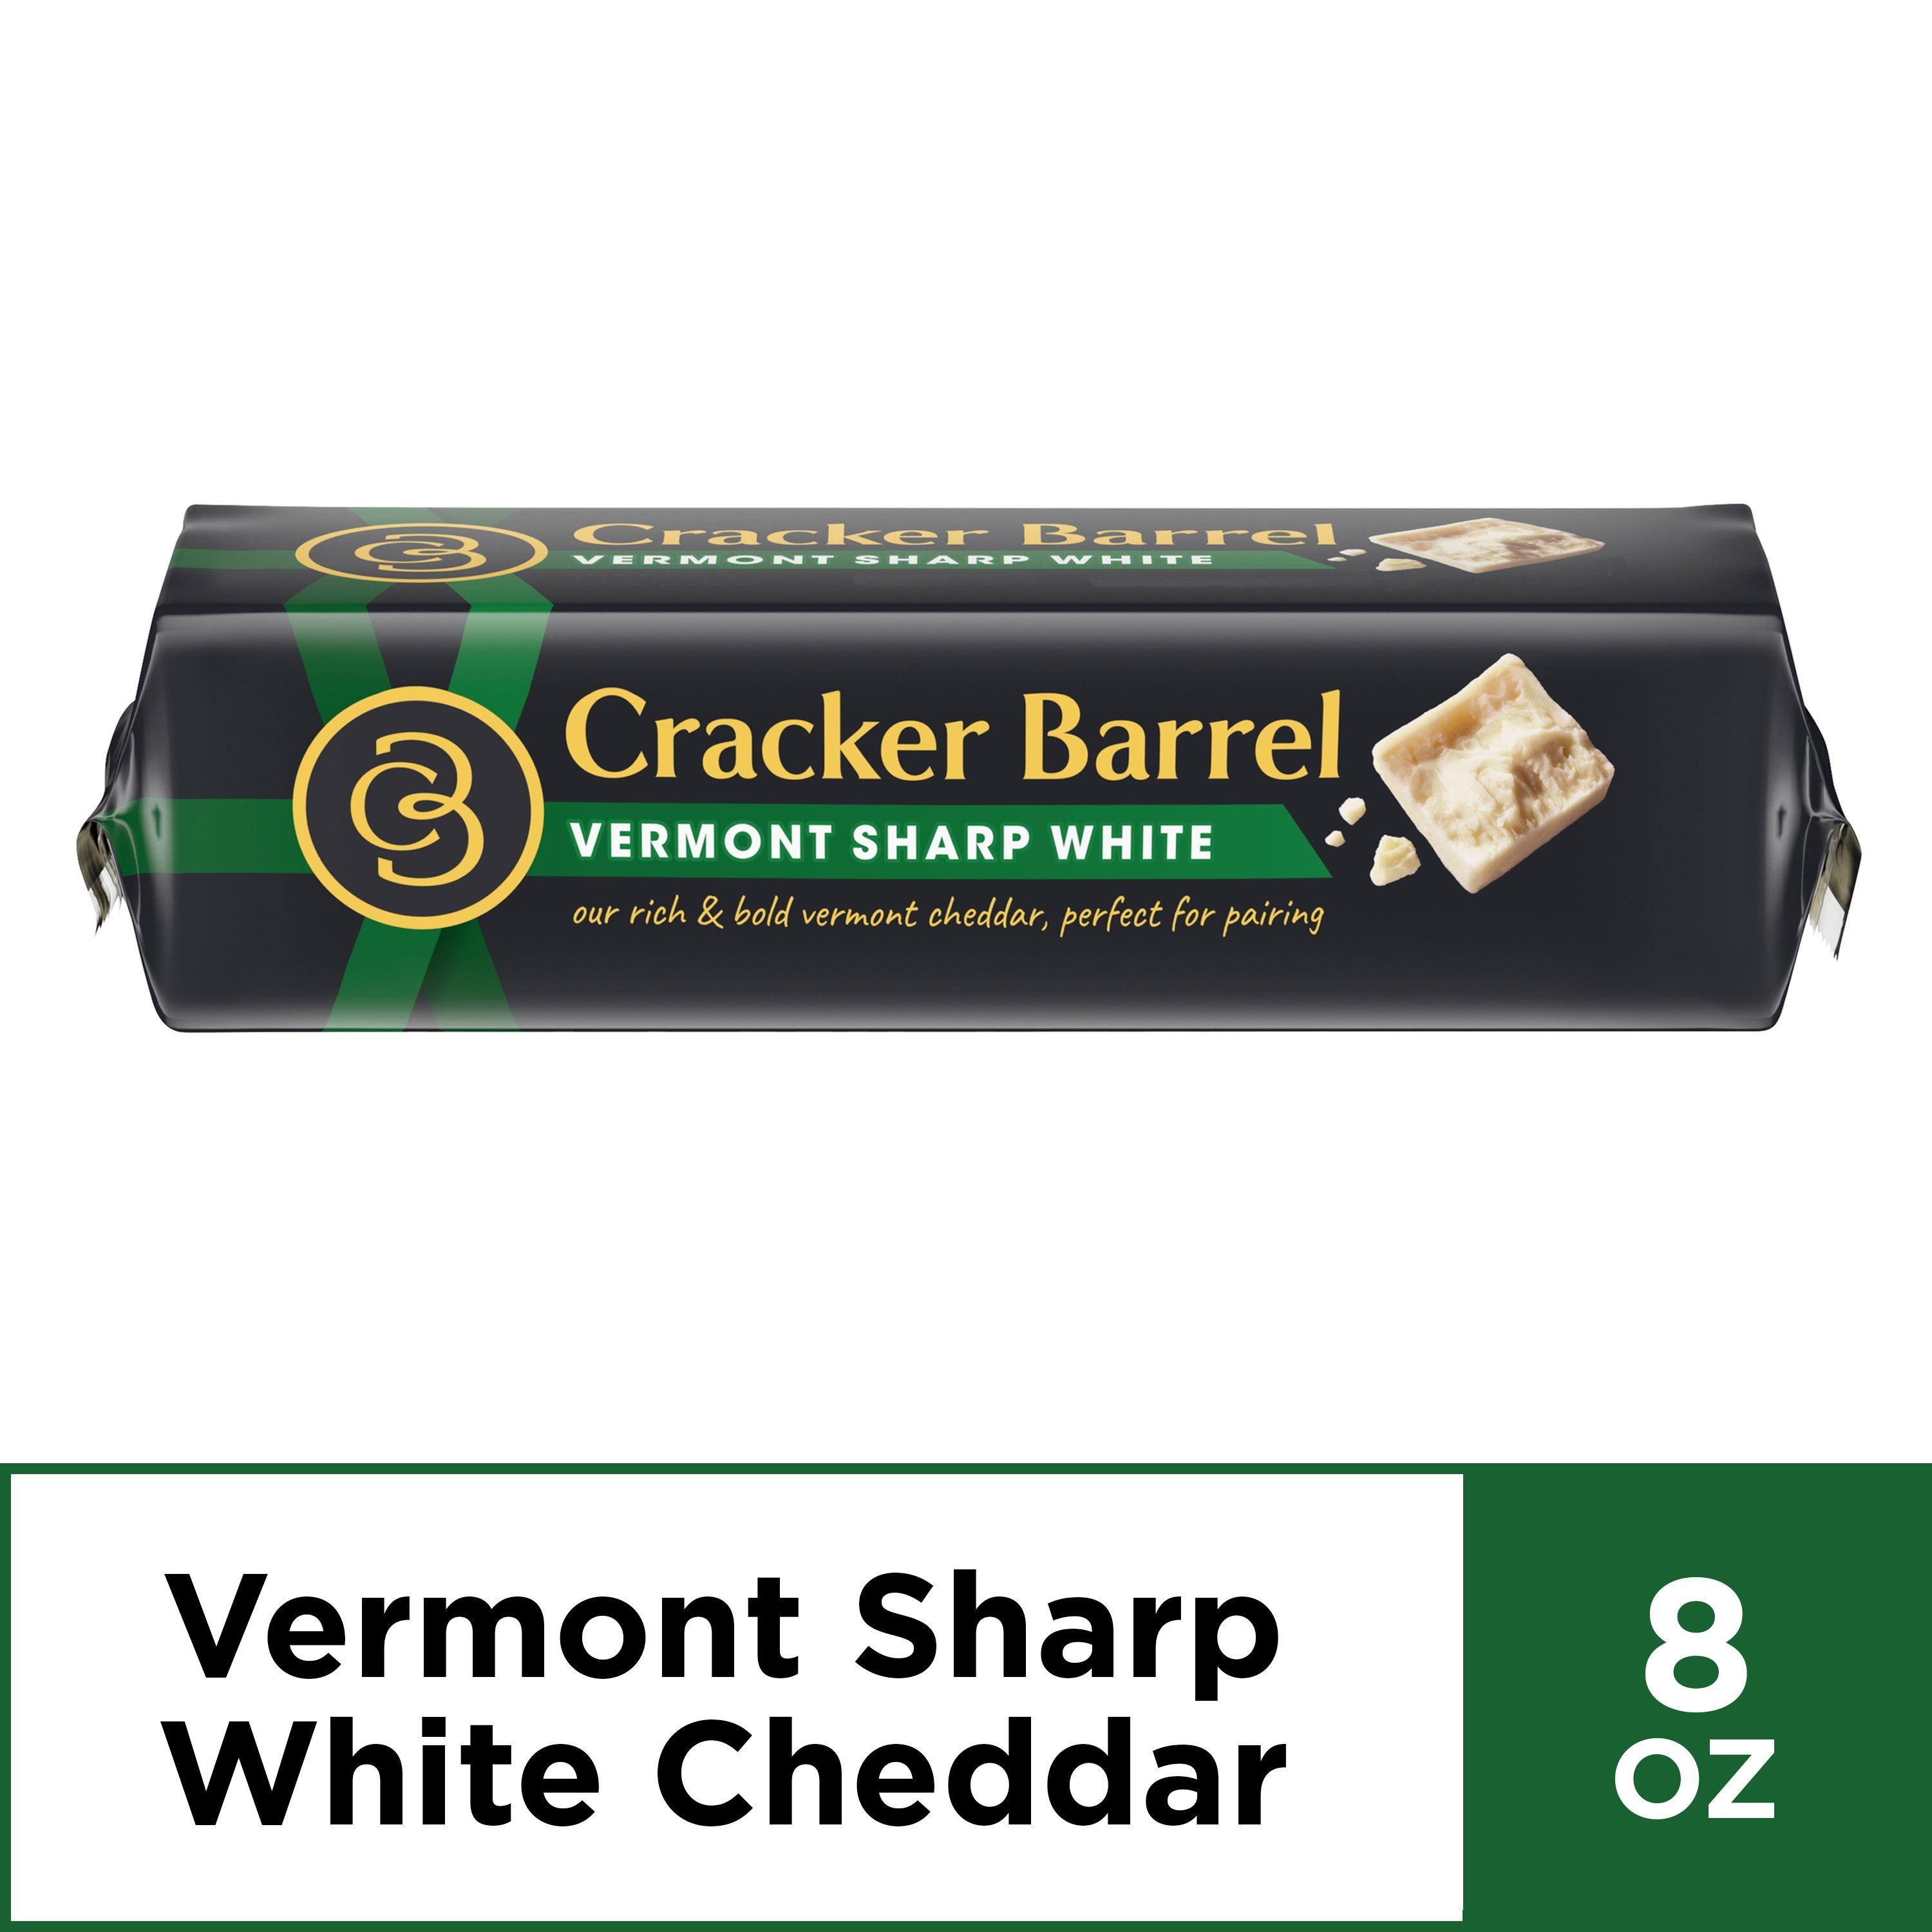 Cracker Barrel Vermont Sharp White Cheddar Cheese Block, 8 Oz Wrapper